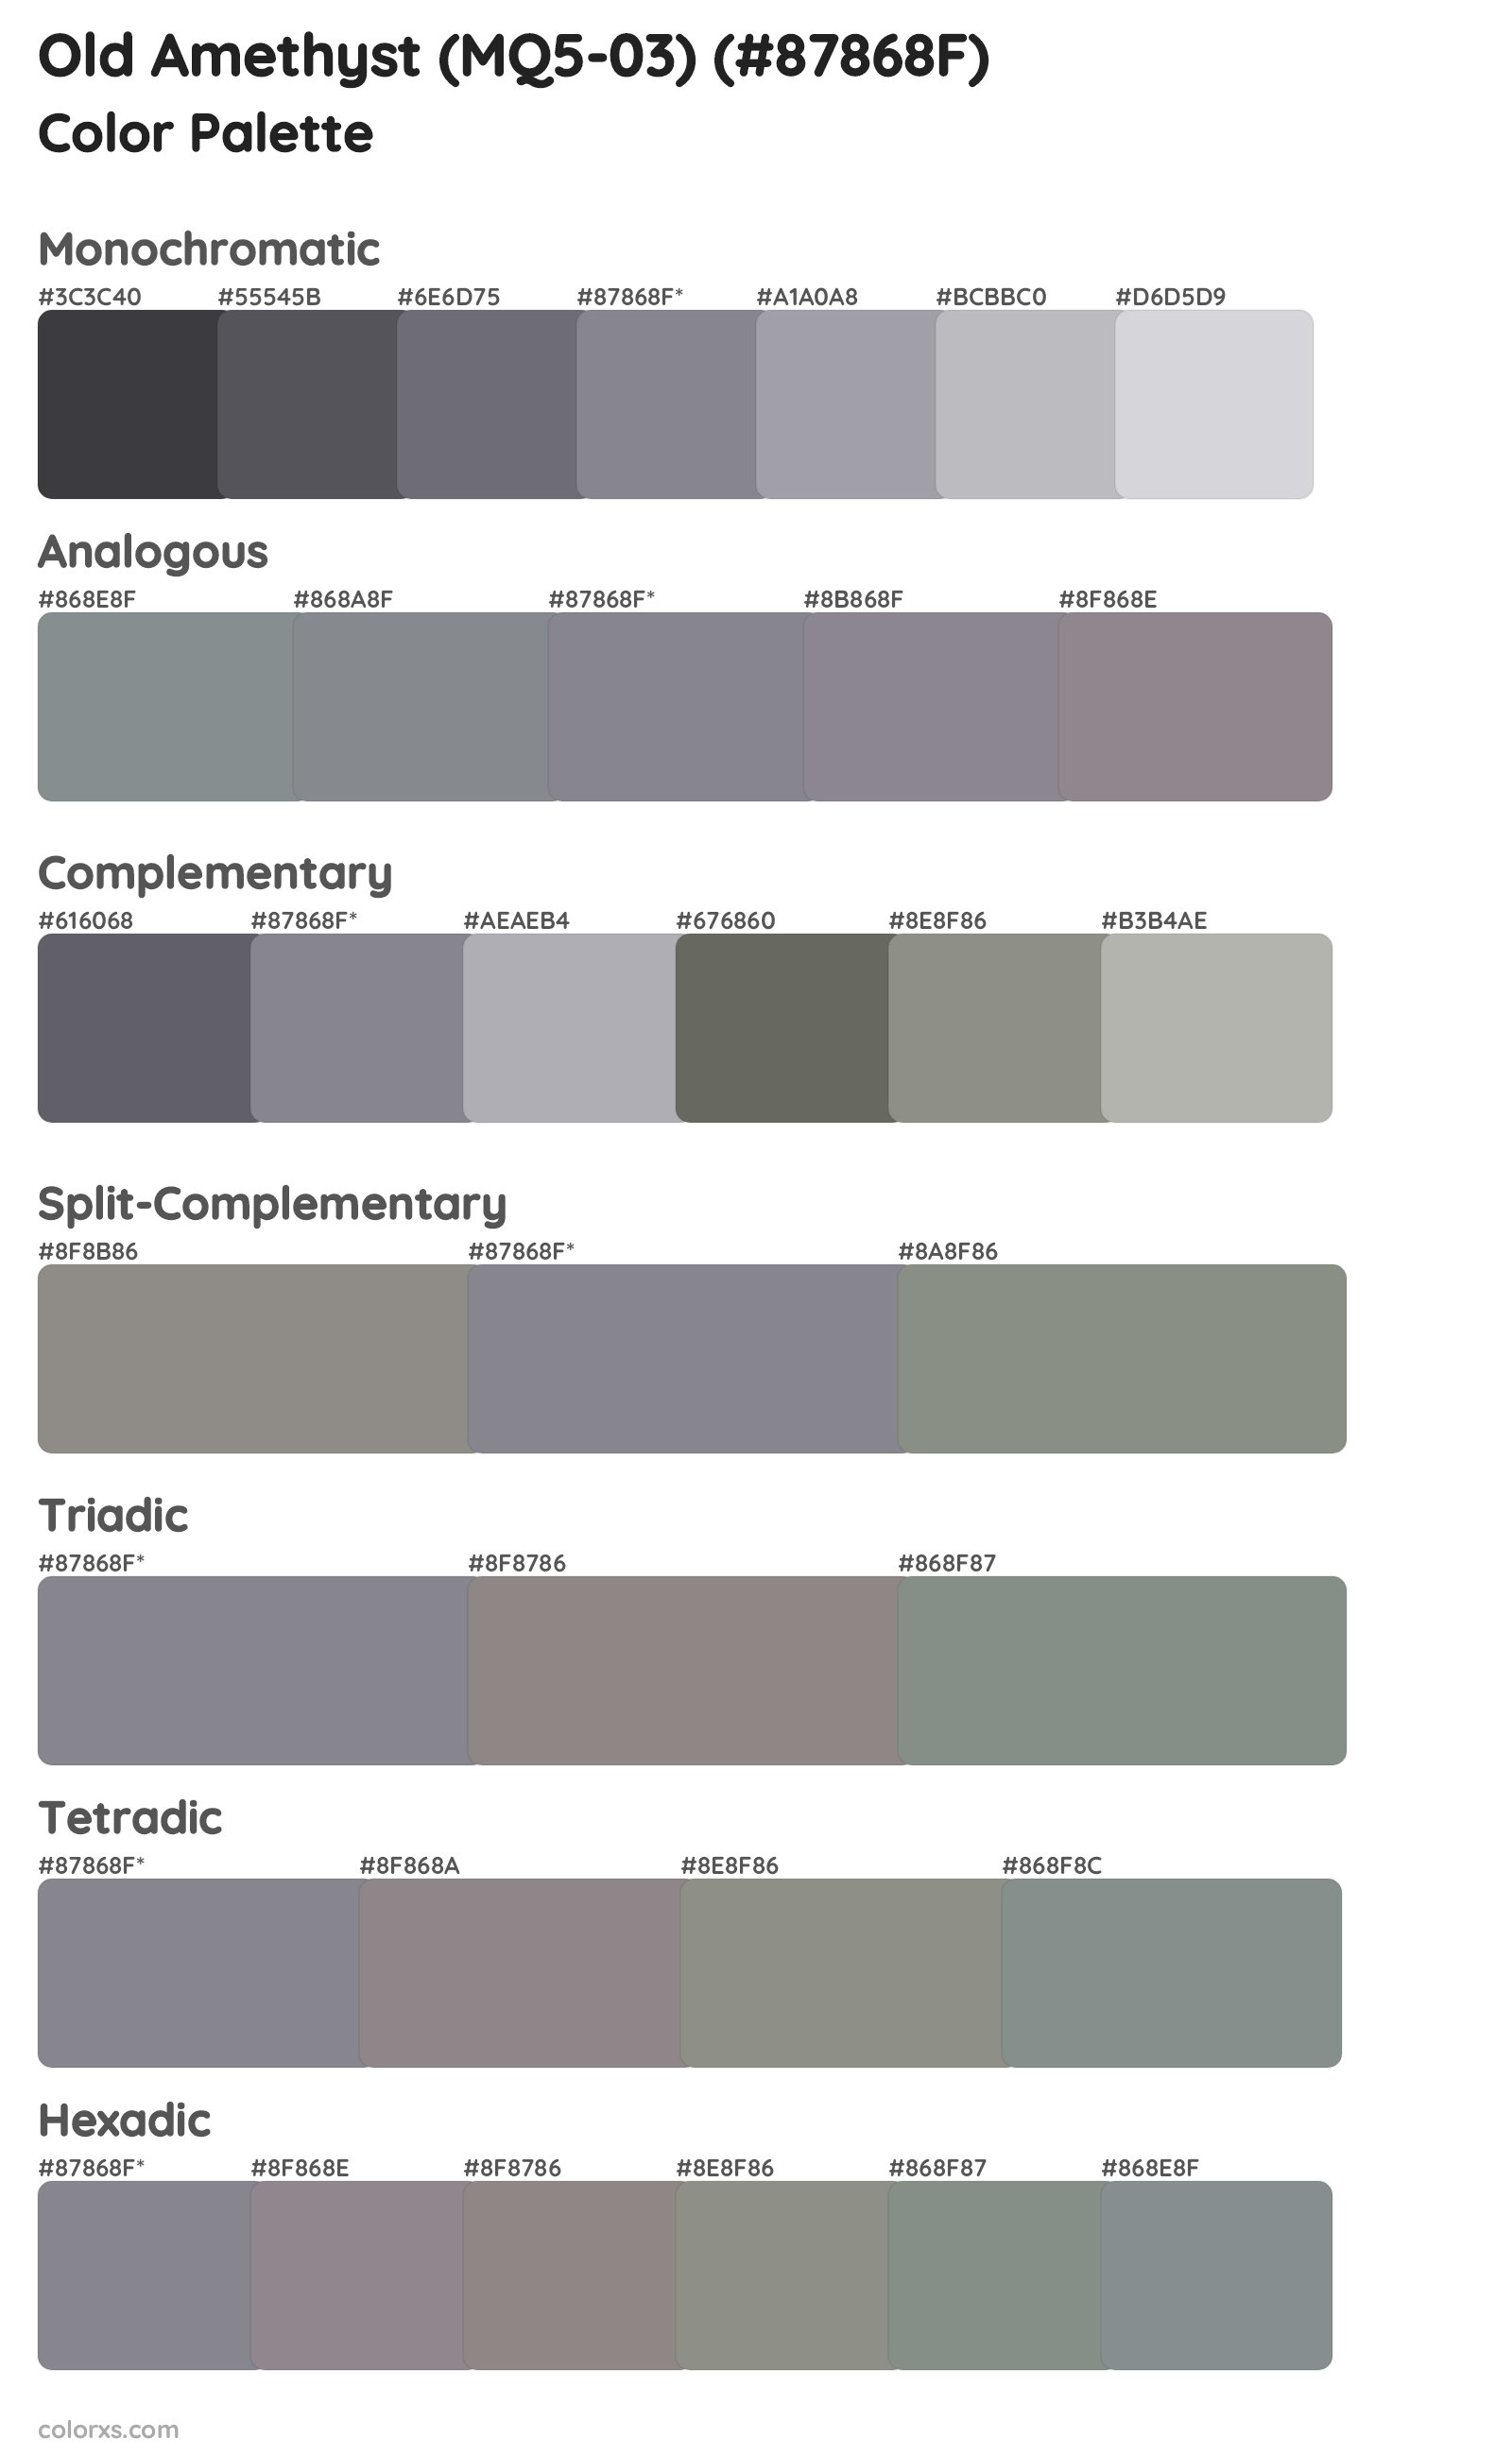 Old Amethyst (MQ5-03) Color Scheme Palettes